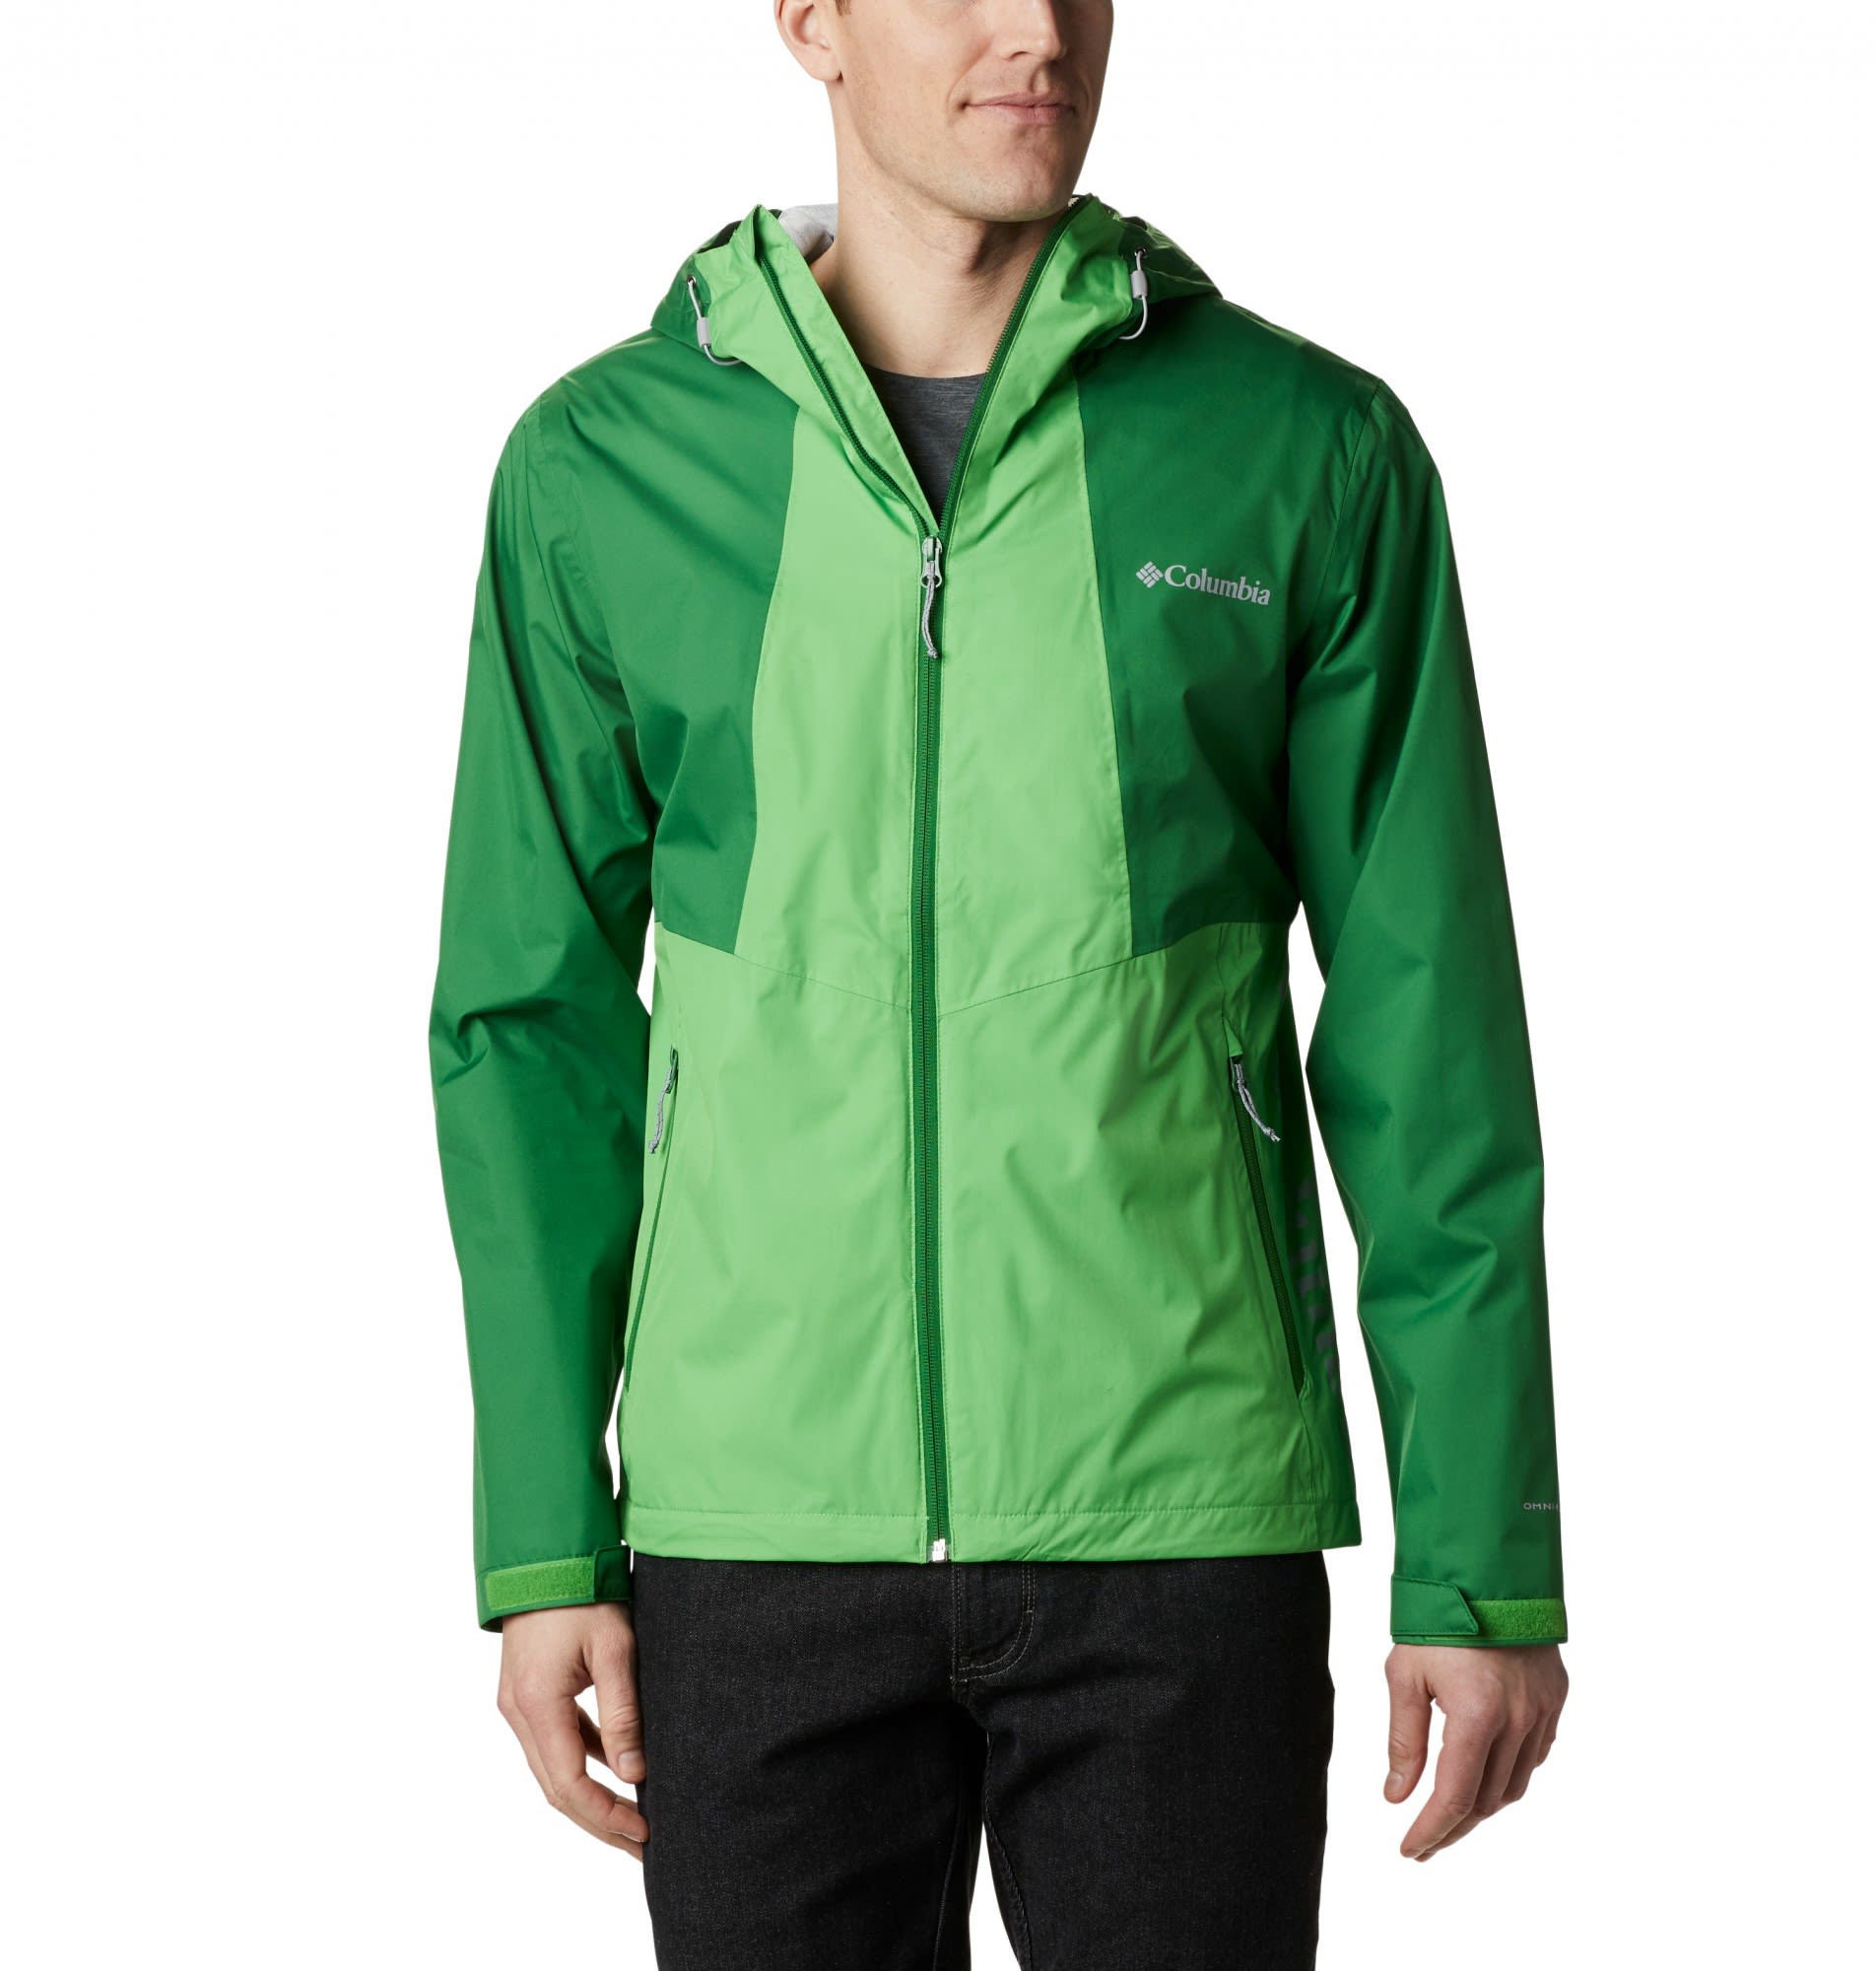 Columbia Inner Limits II Jacket Colorblock - Grn- Male Regenjacken und Hardshells- Grsse S - Farbe True Green - Green Boa unter Columbia